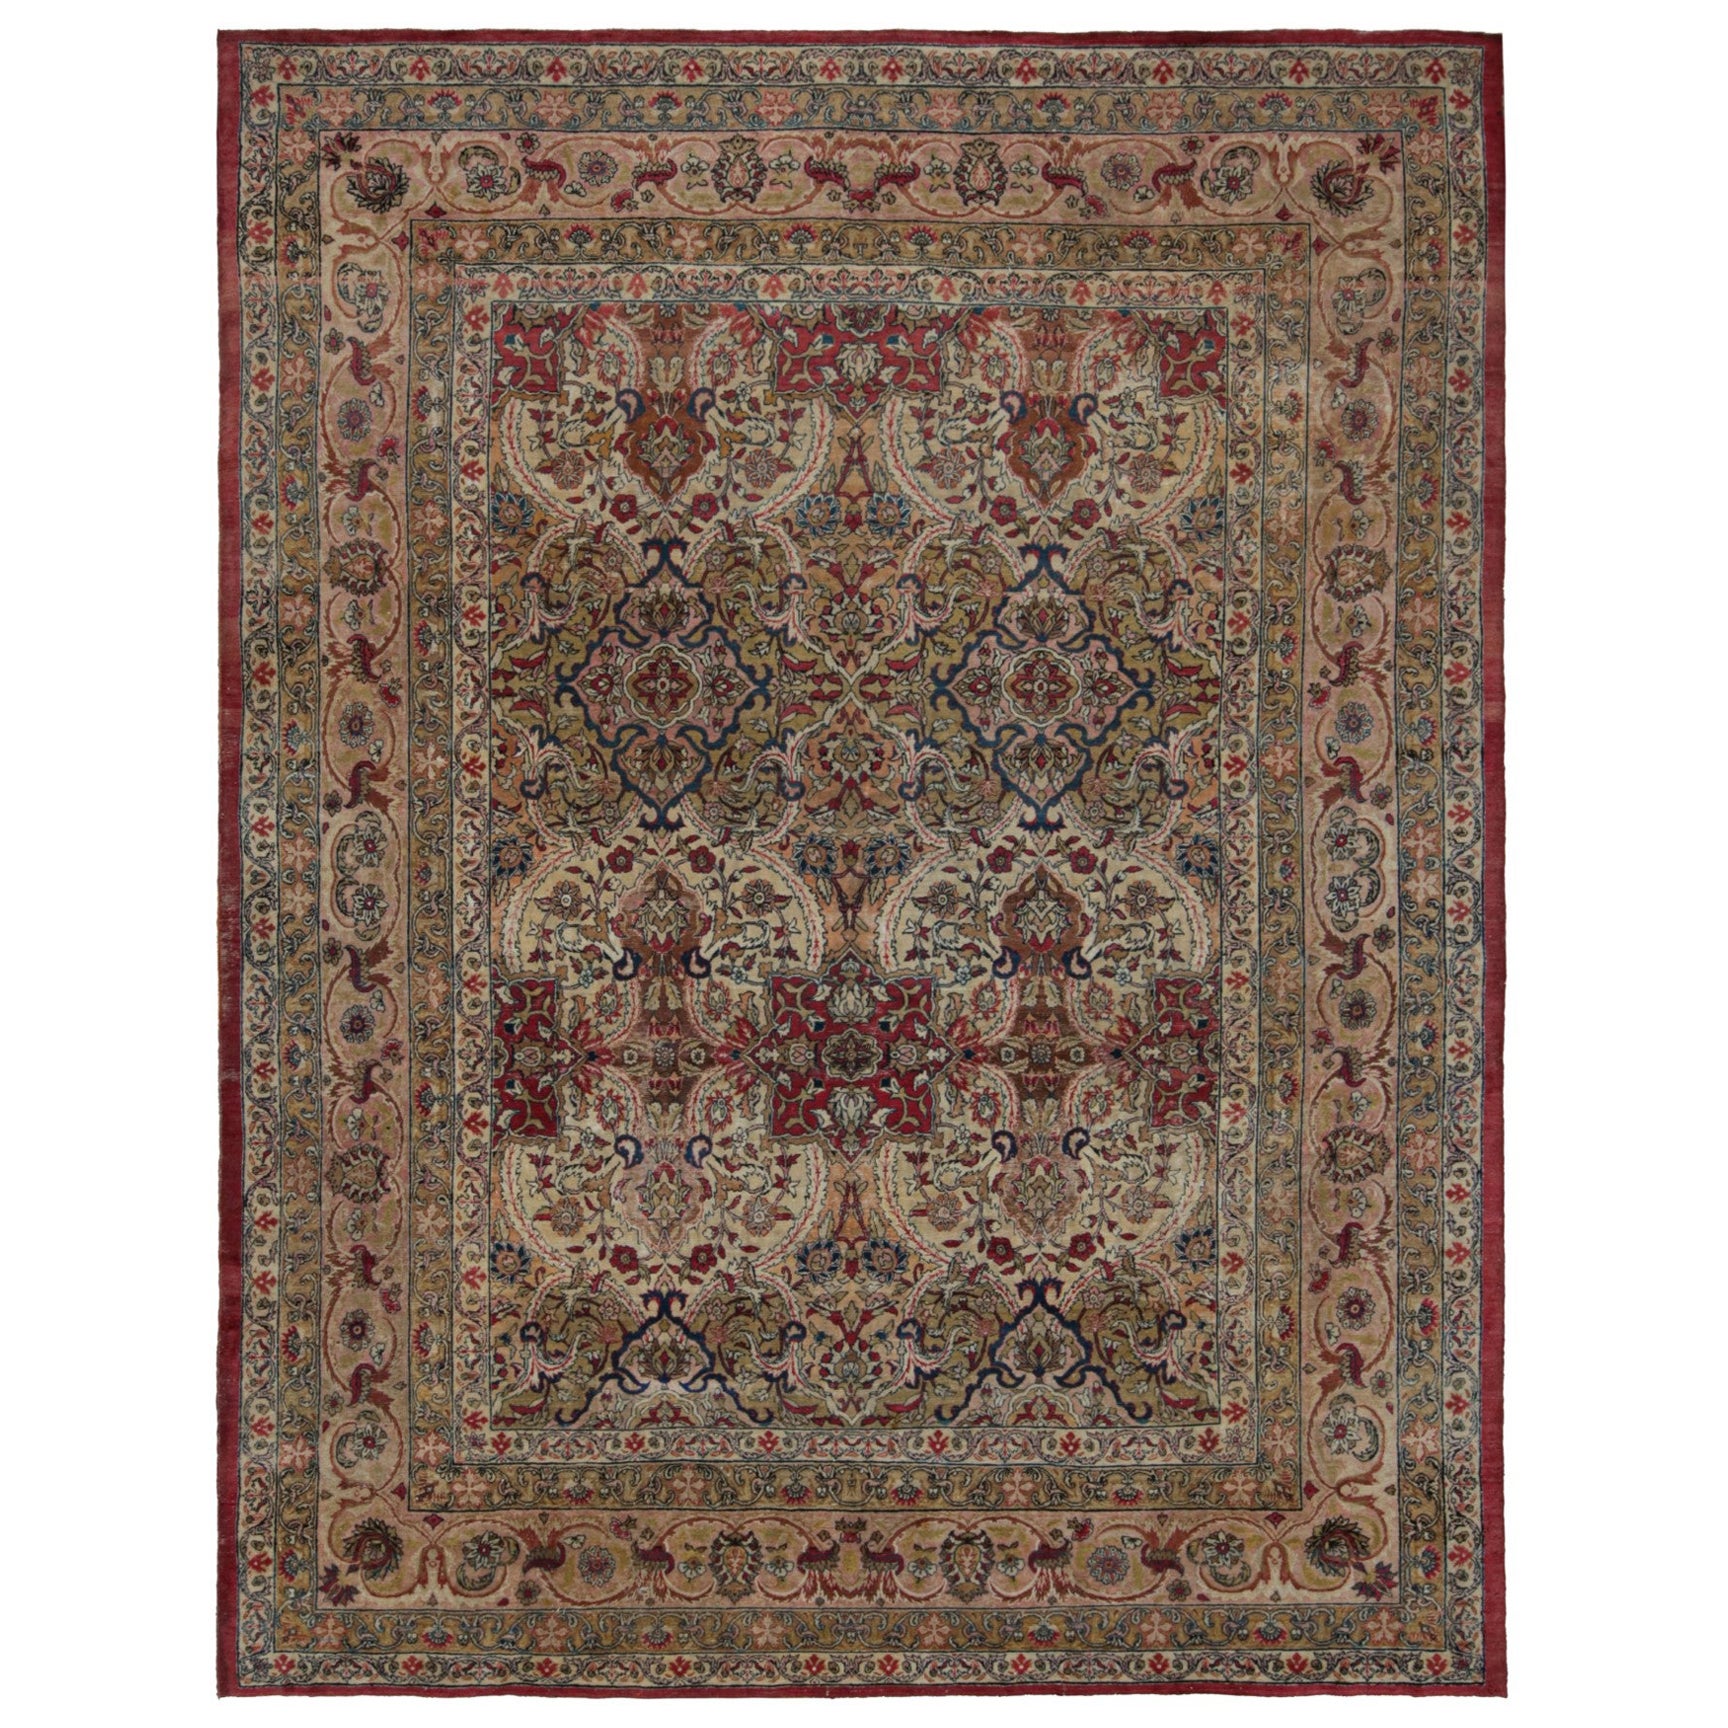 Vintage Persian Kerman Lavar rug, with Floral Patterns, from Rug & Kilim